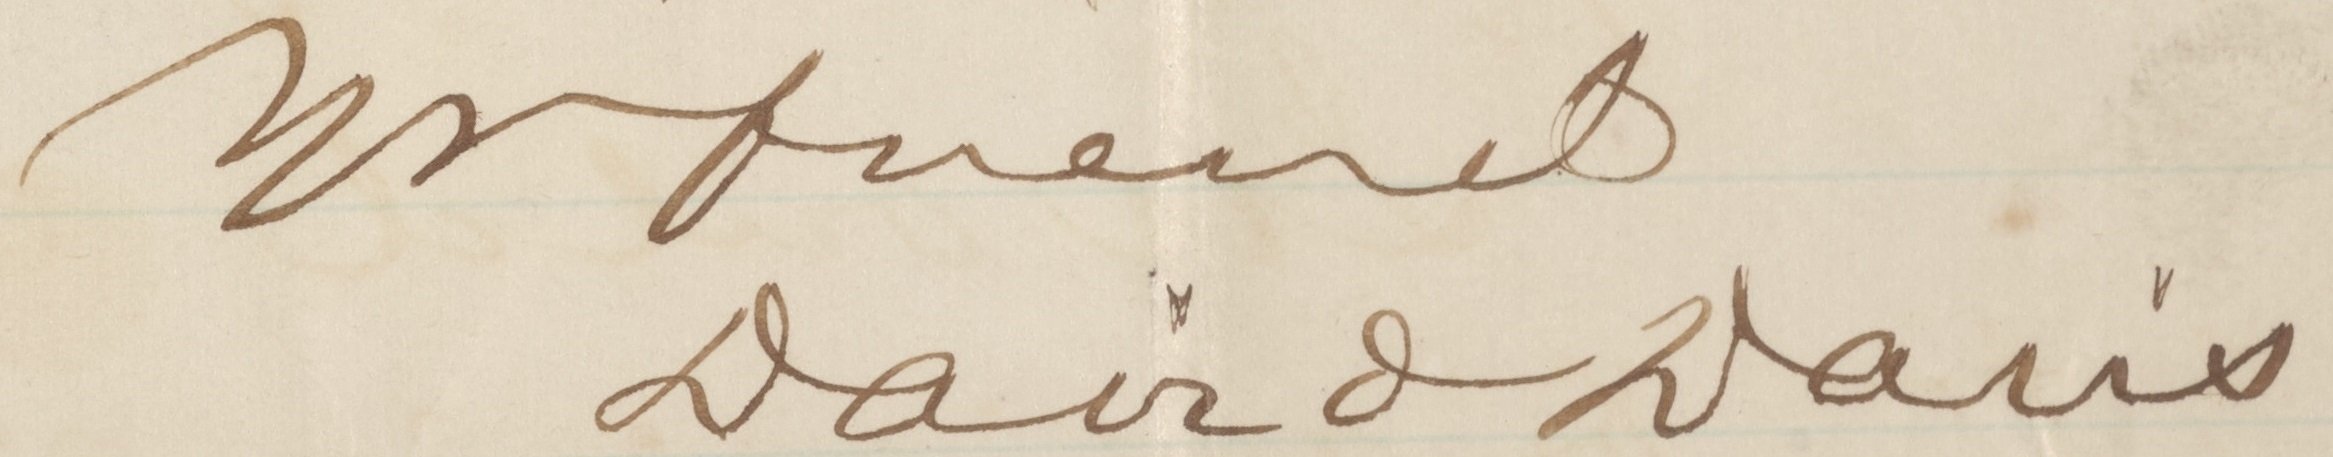 Digital image of handwritten letter from David Davis to Henry Clay Whitney, 10 December 1861, signature detail: "Yr friend, David Davis"